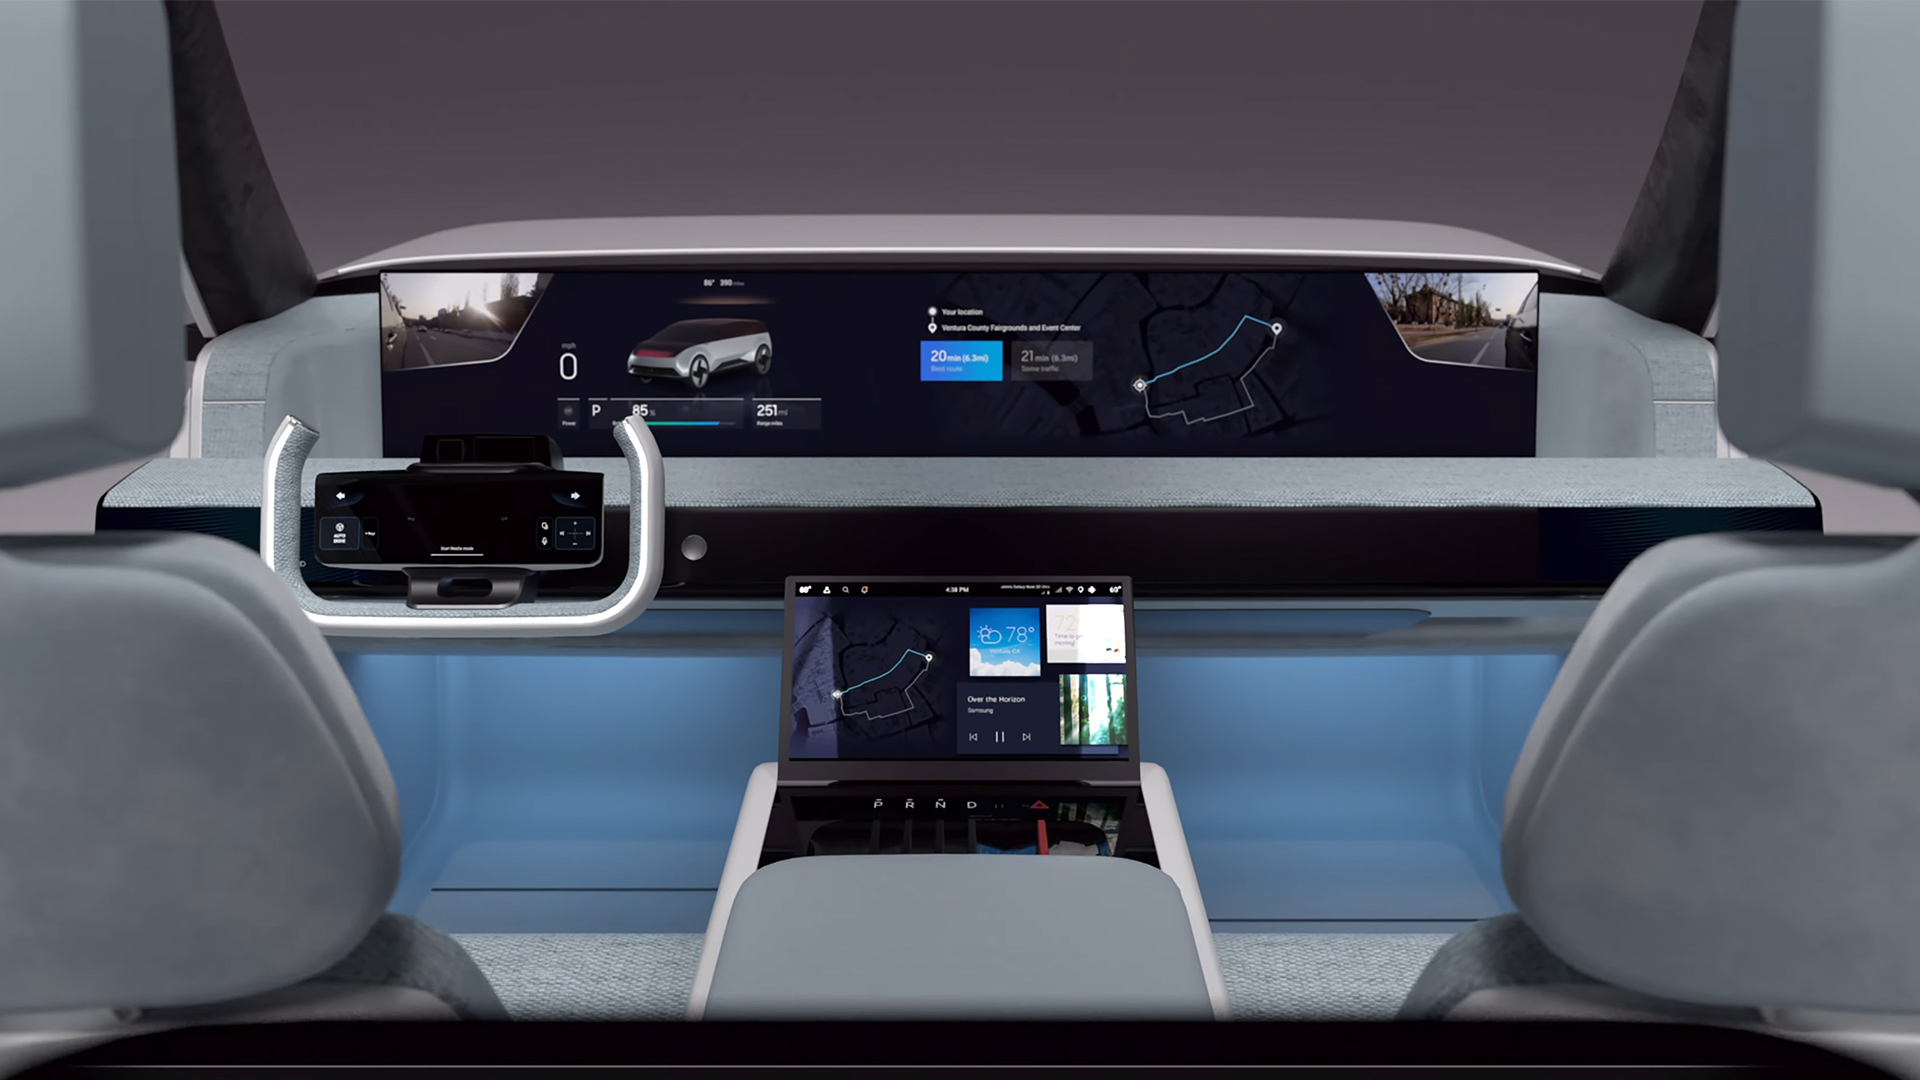 Samsung's nextgen Digital Cockpit for smart cars has giant screens